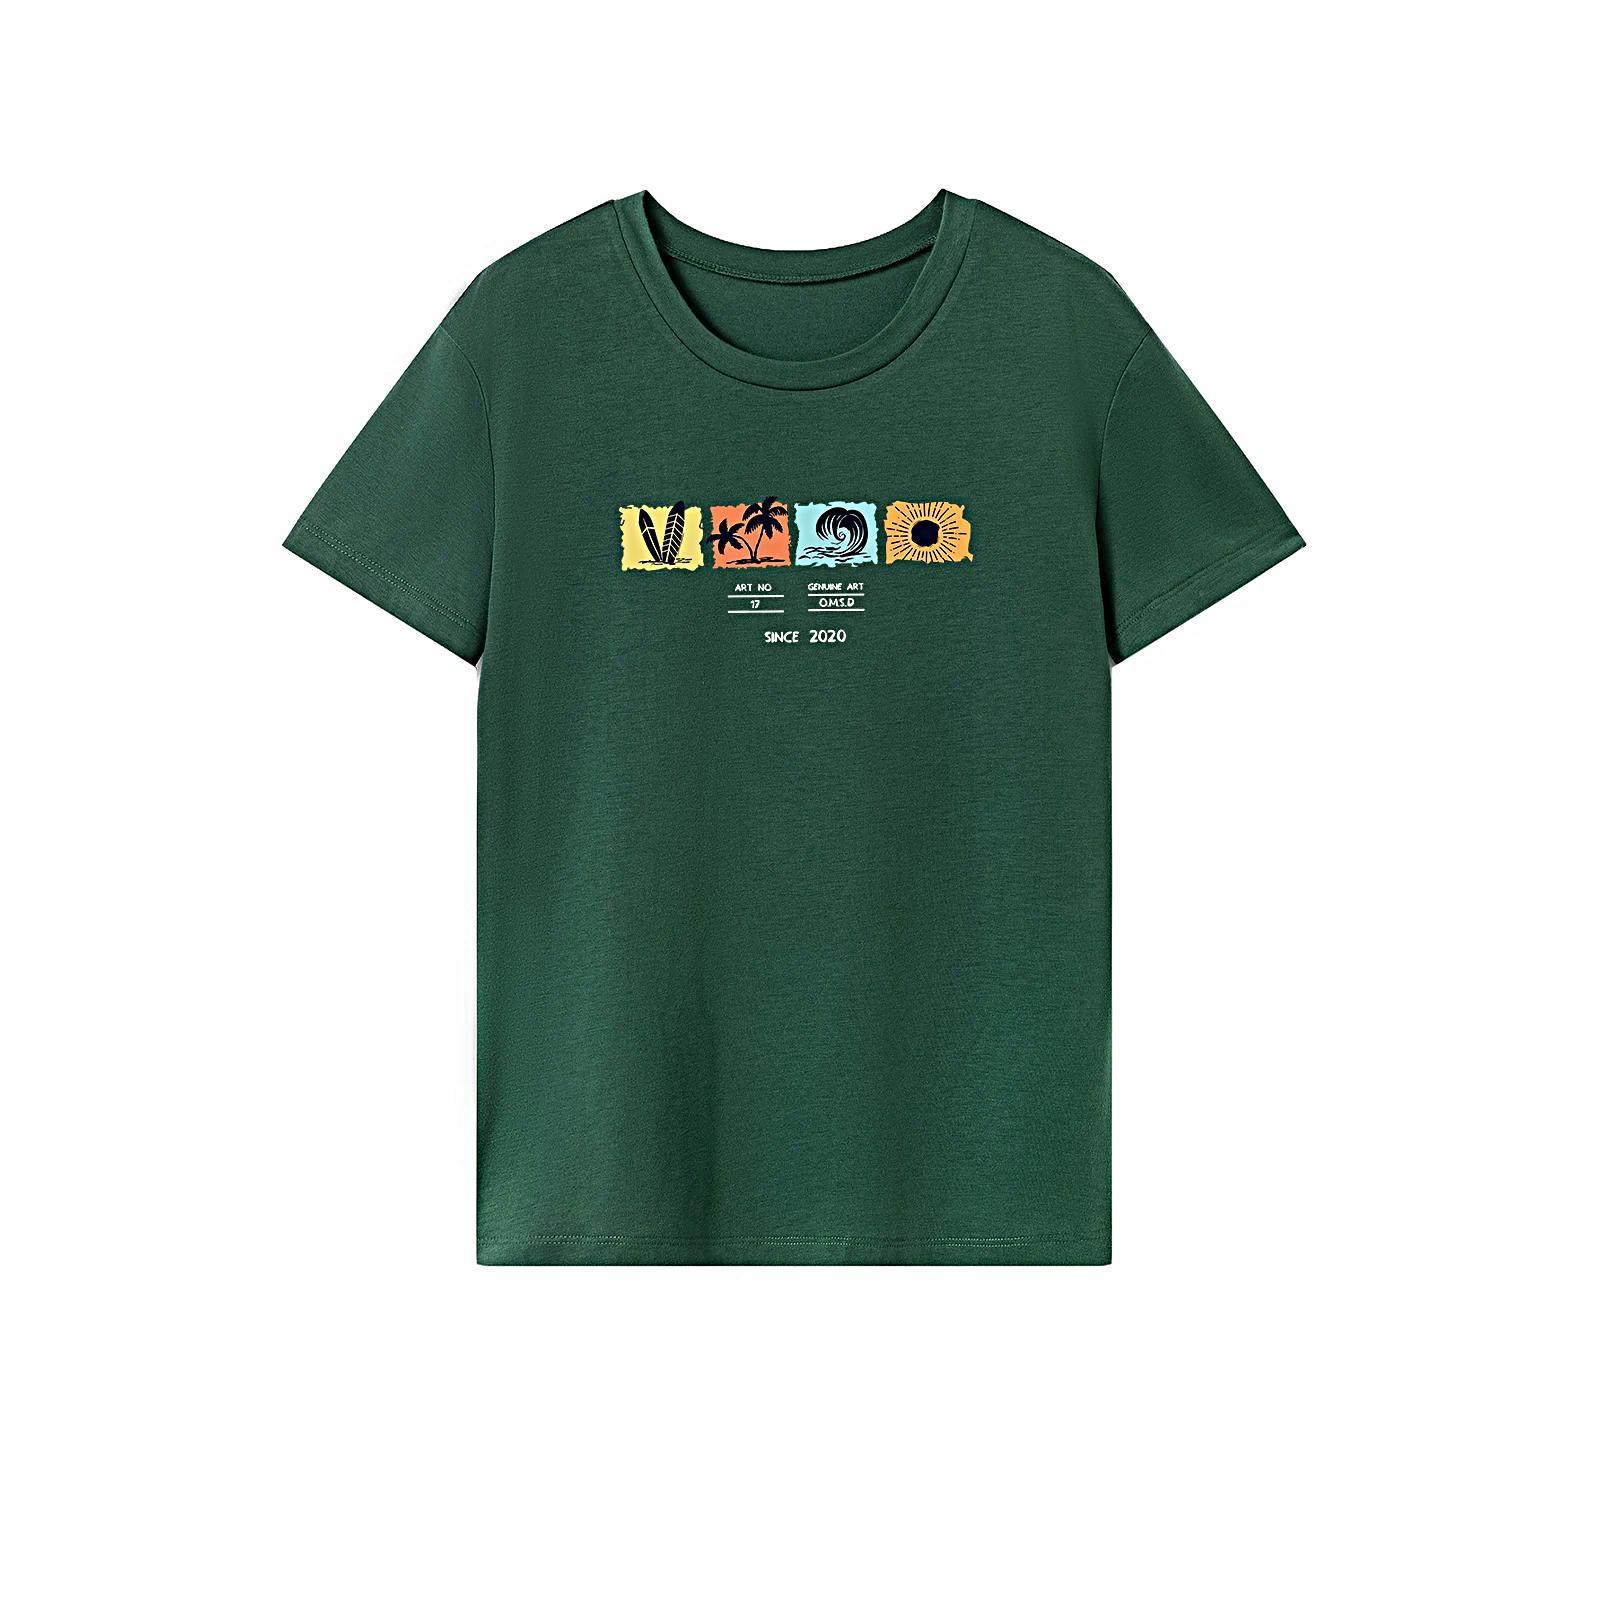 T Shirt for Women Summer Basic Tee Shirt for Commuting Backpacking Traveling XL